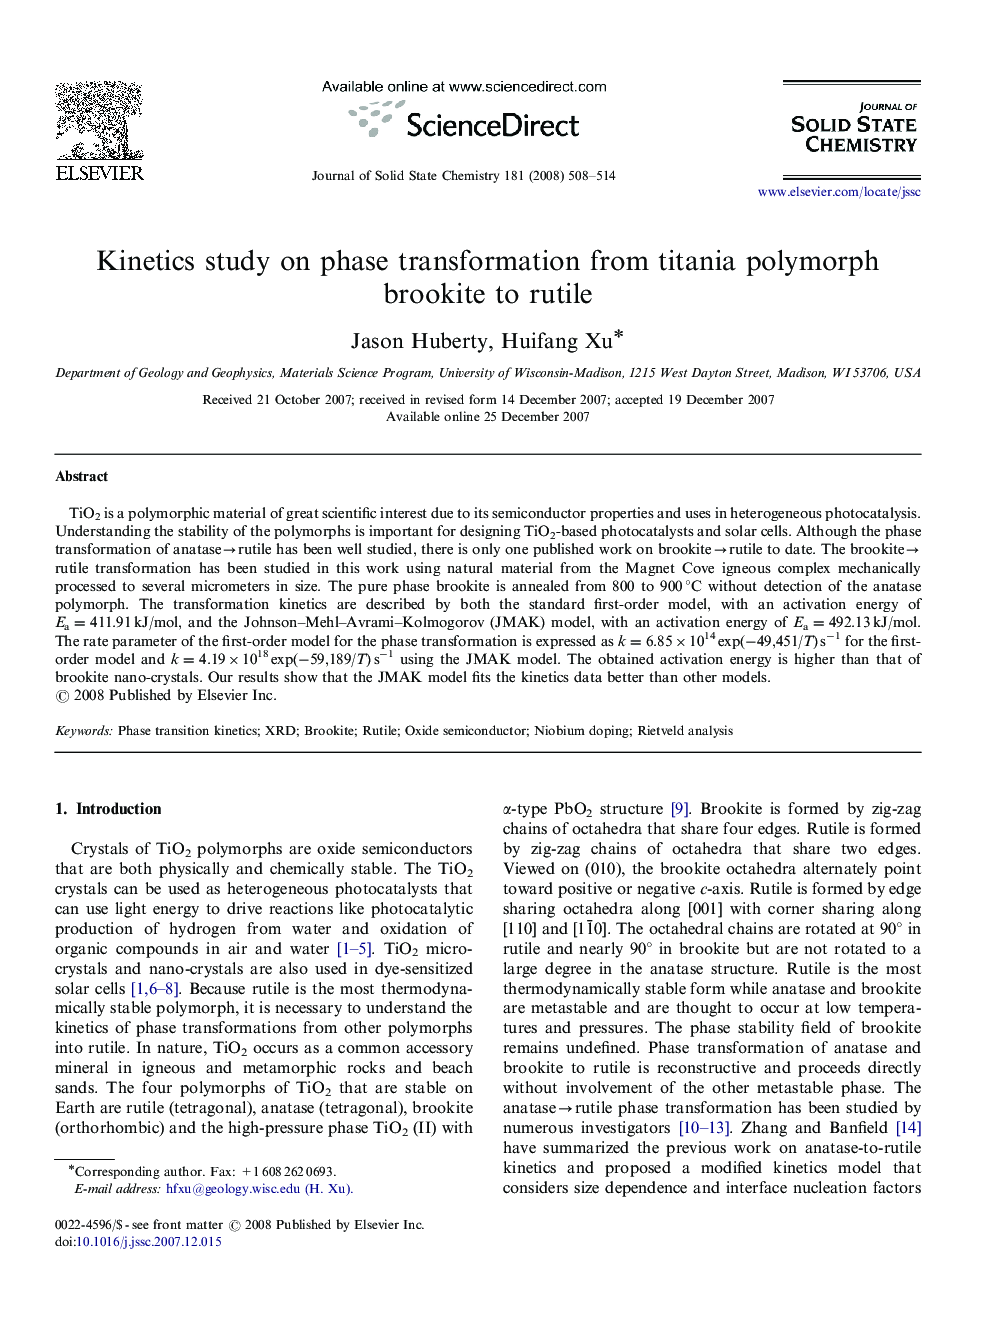 Kinetics study on phase transformation from titania polymorph brookite to rutile